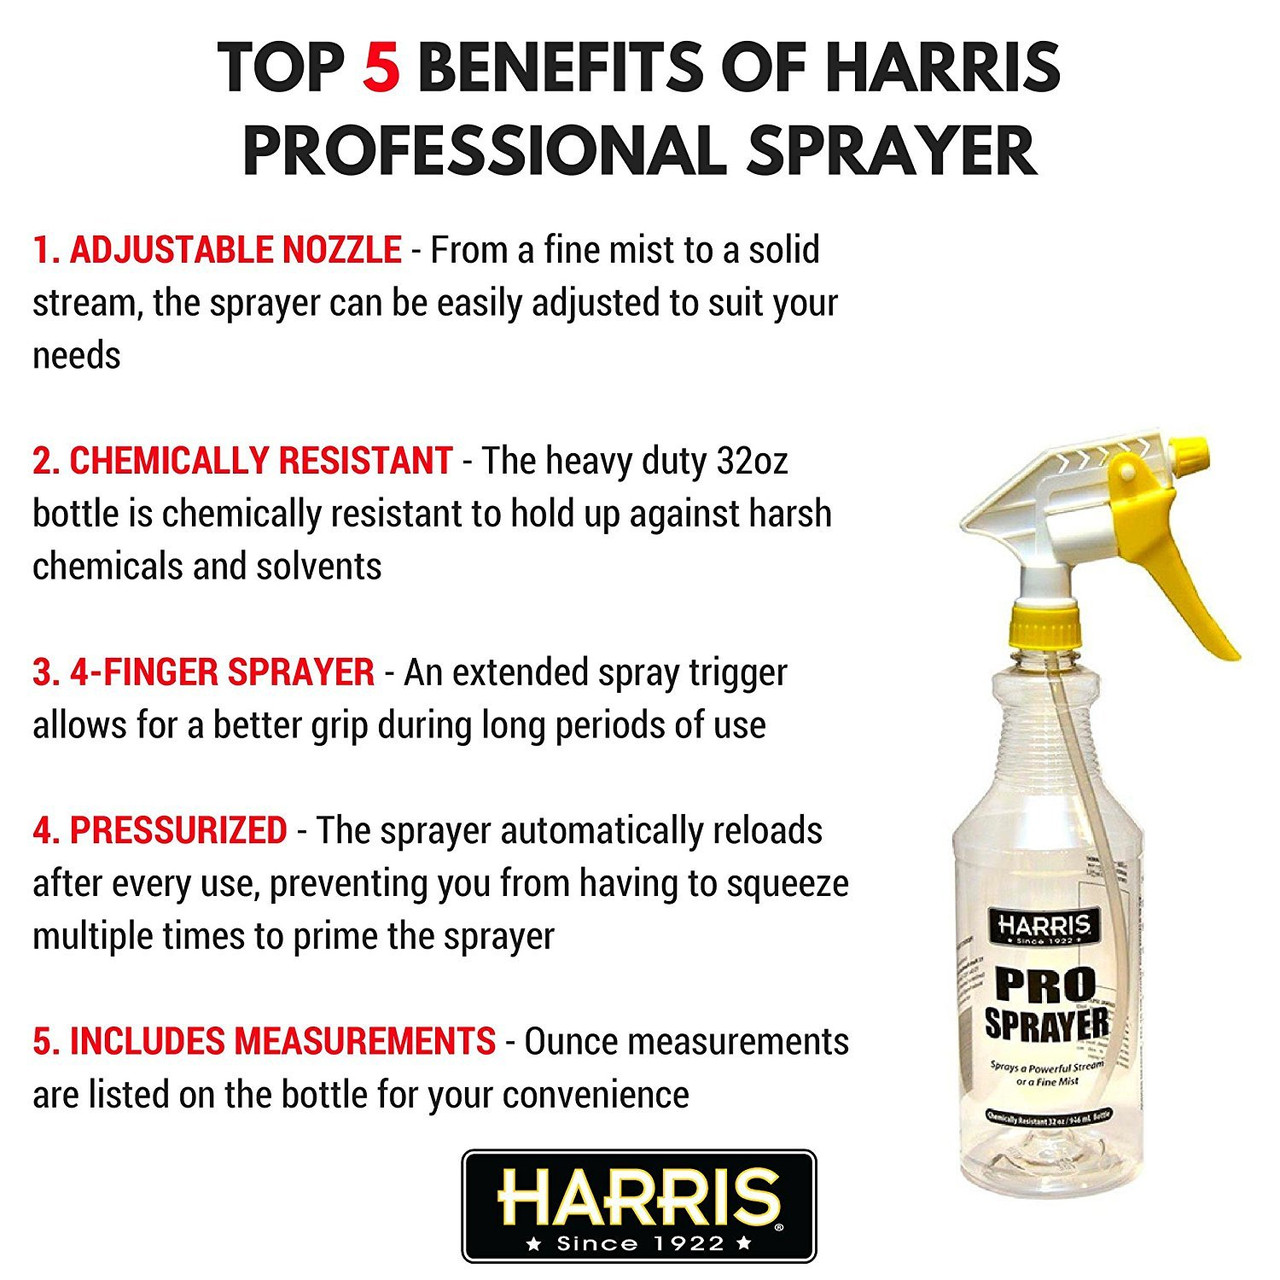 Spraymaster Sprayer with Bottle # 32 oz Chemical Resistant